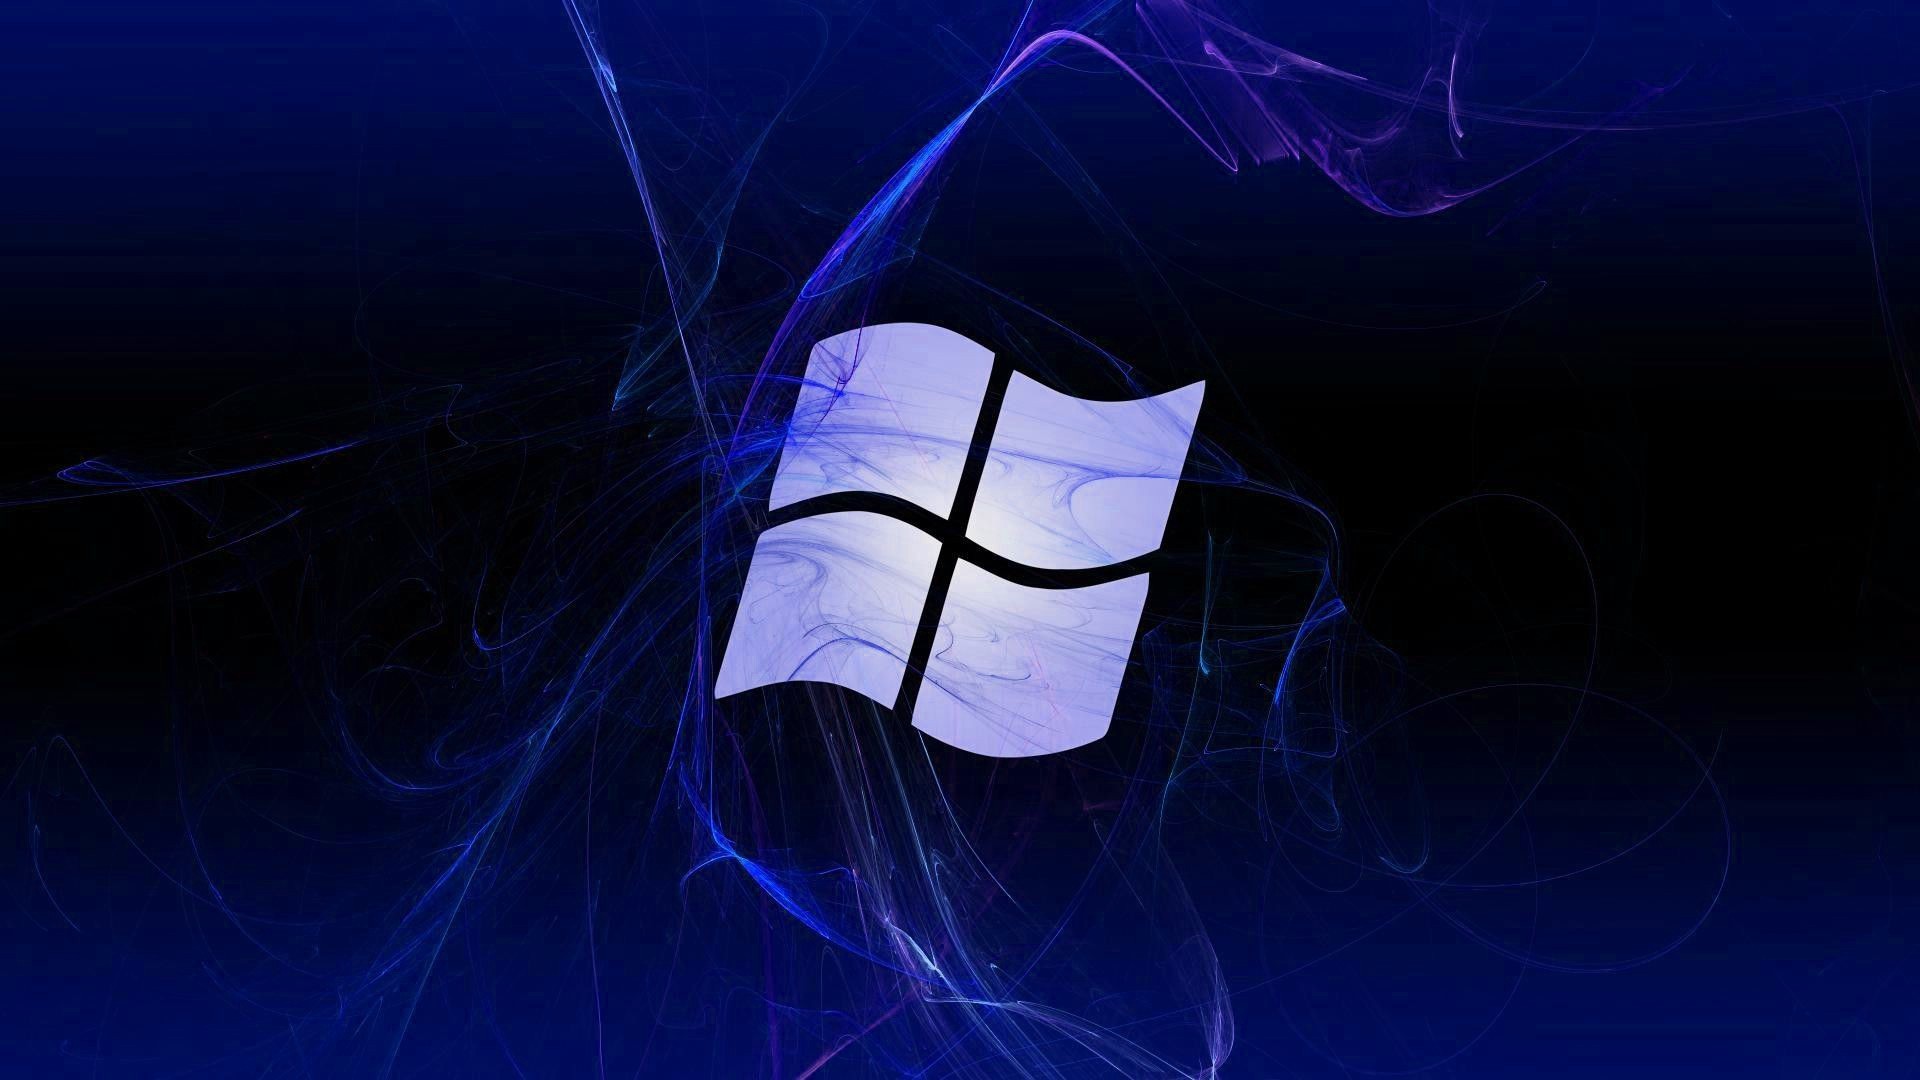 Windows 10, Windows 8 Wallpaper